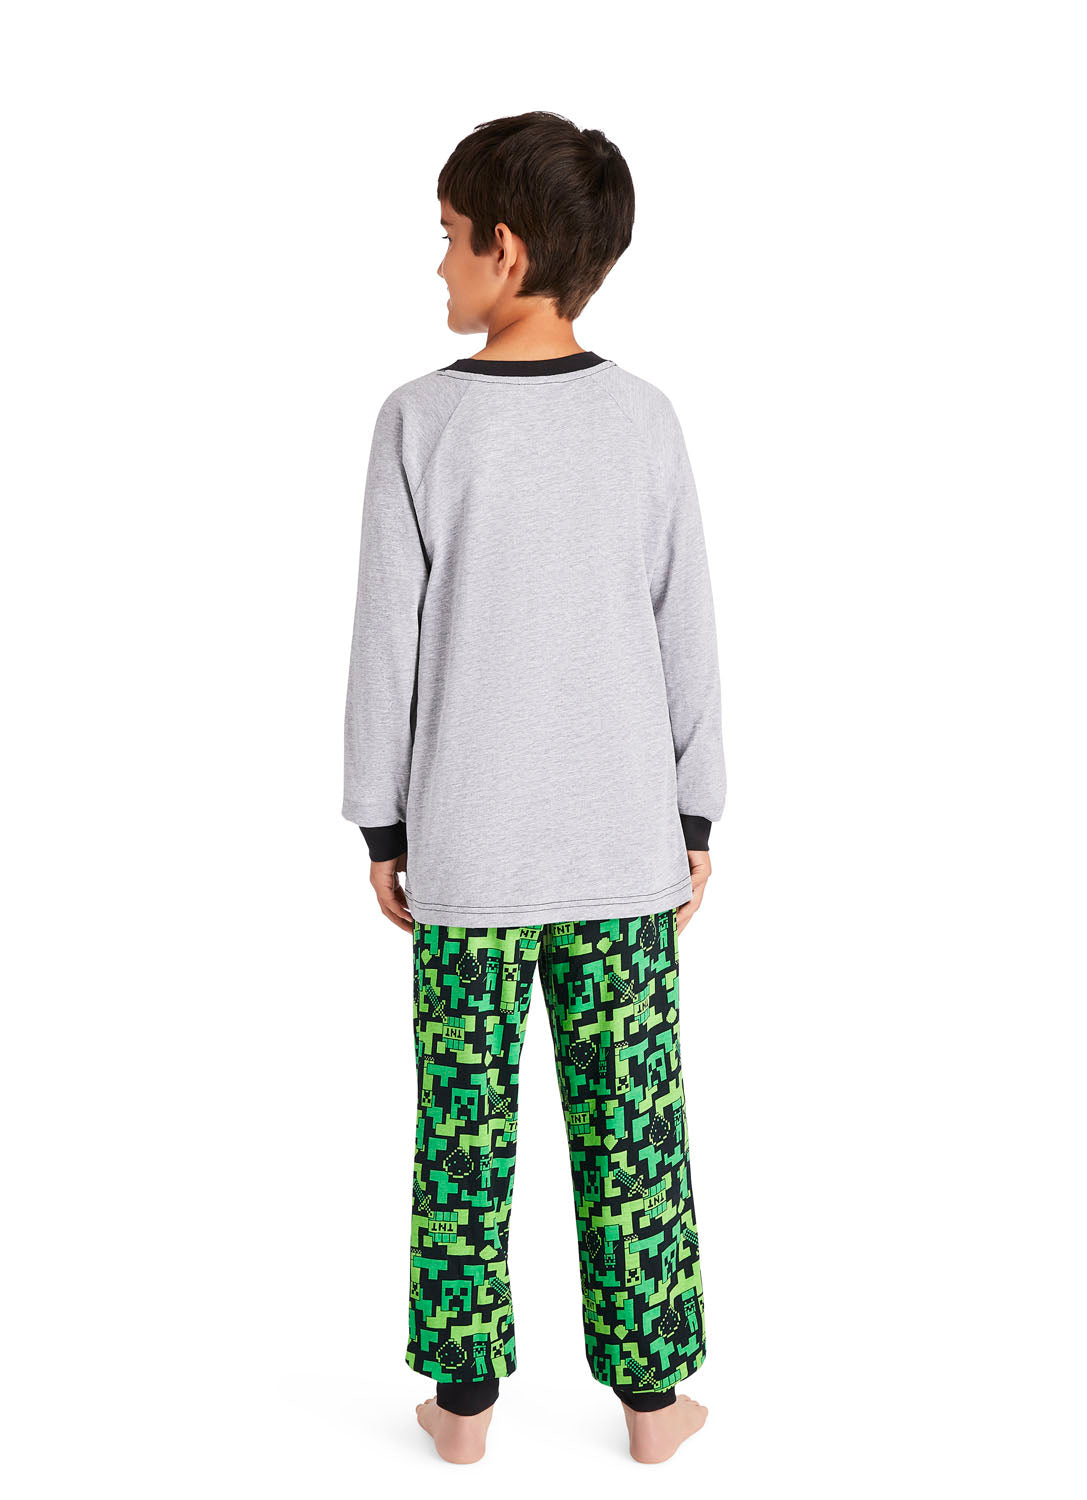 Back view Boy wearing Minecraft print Pajama Set